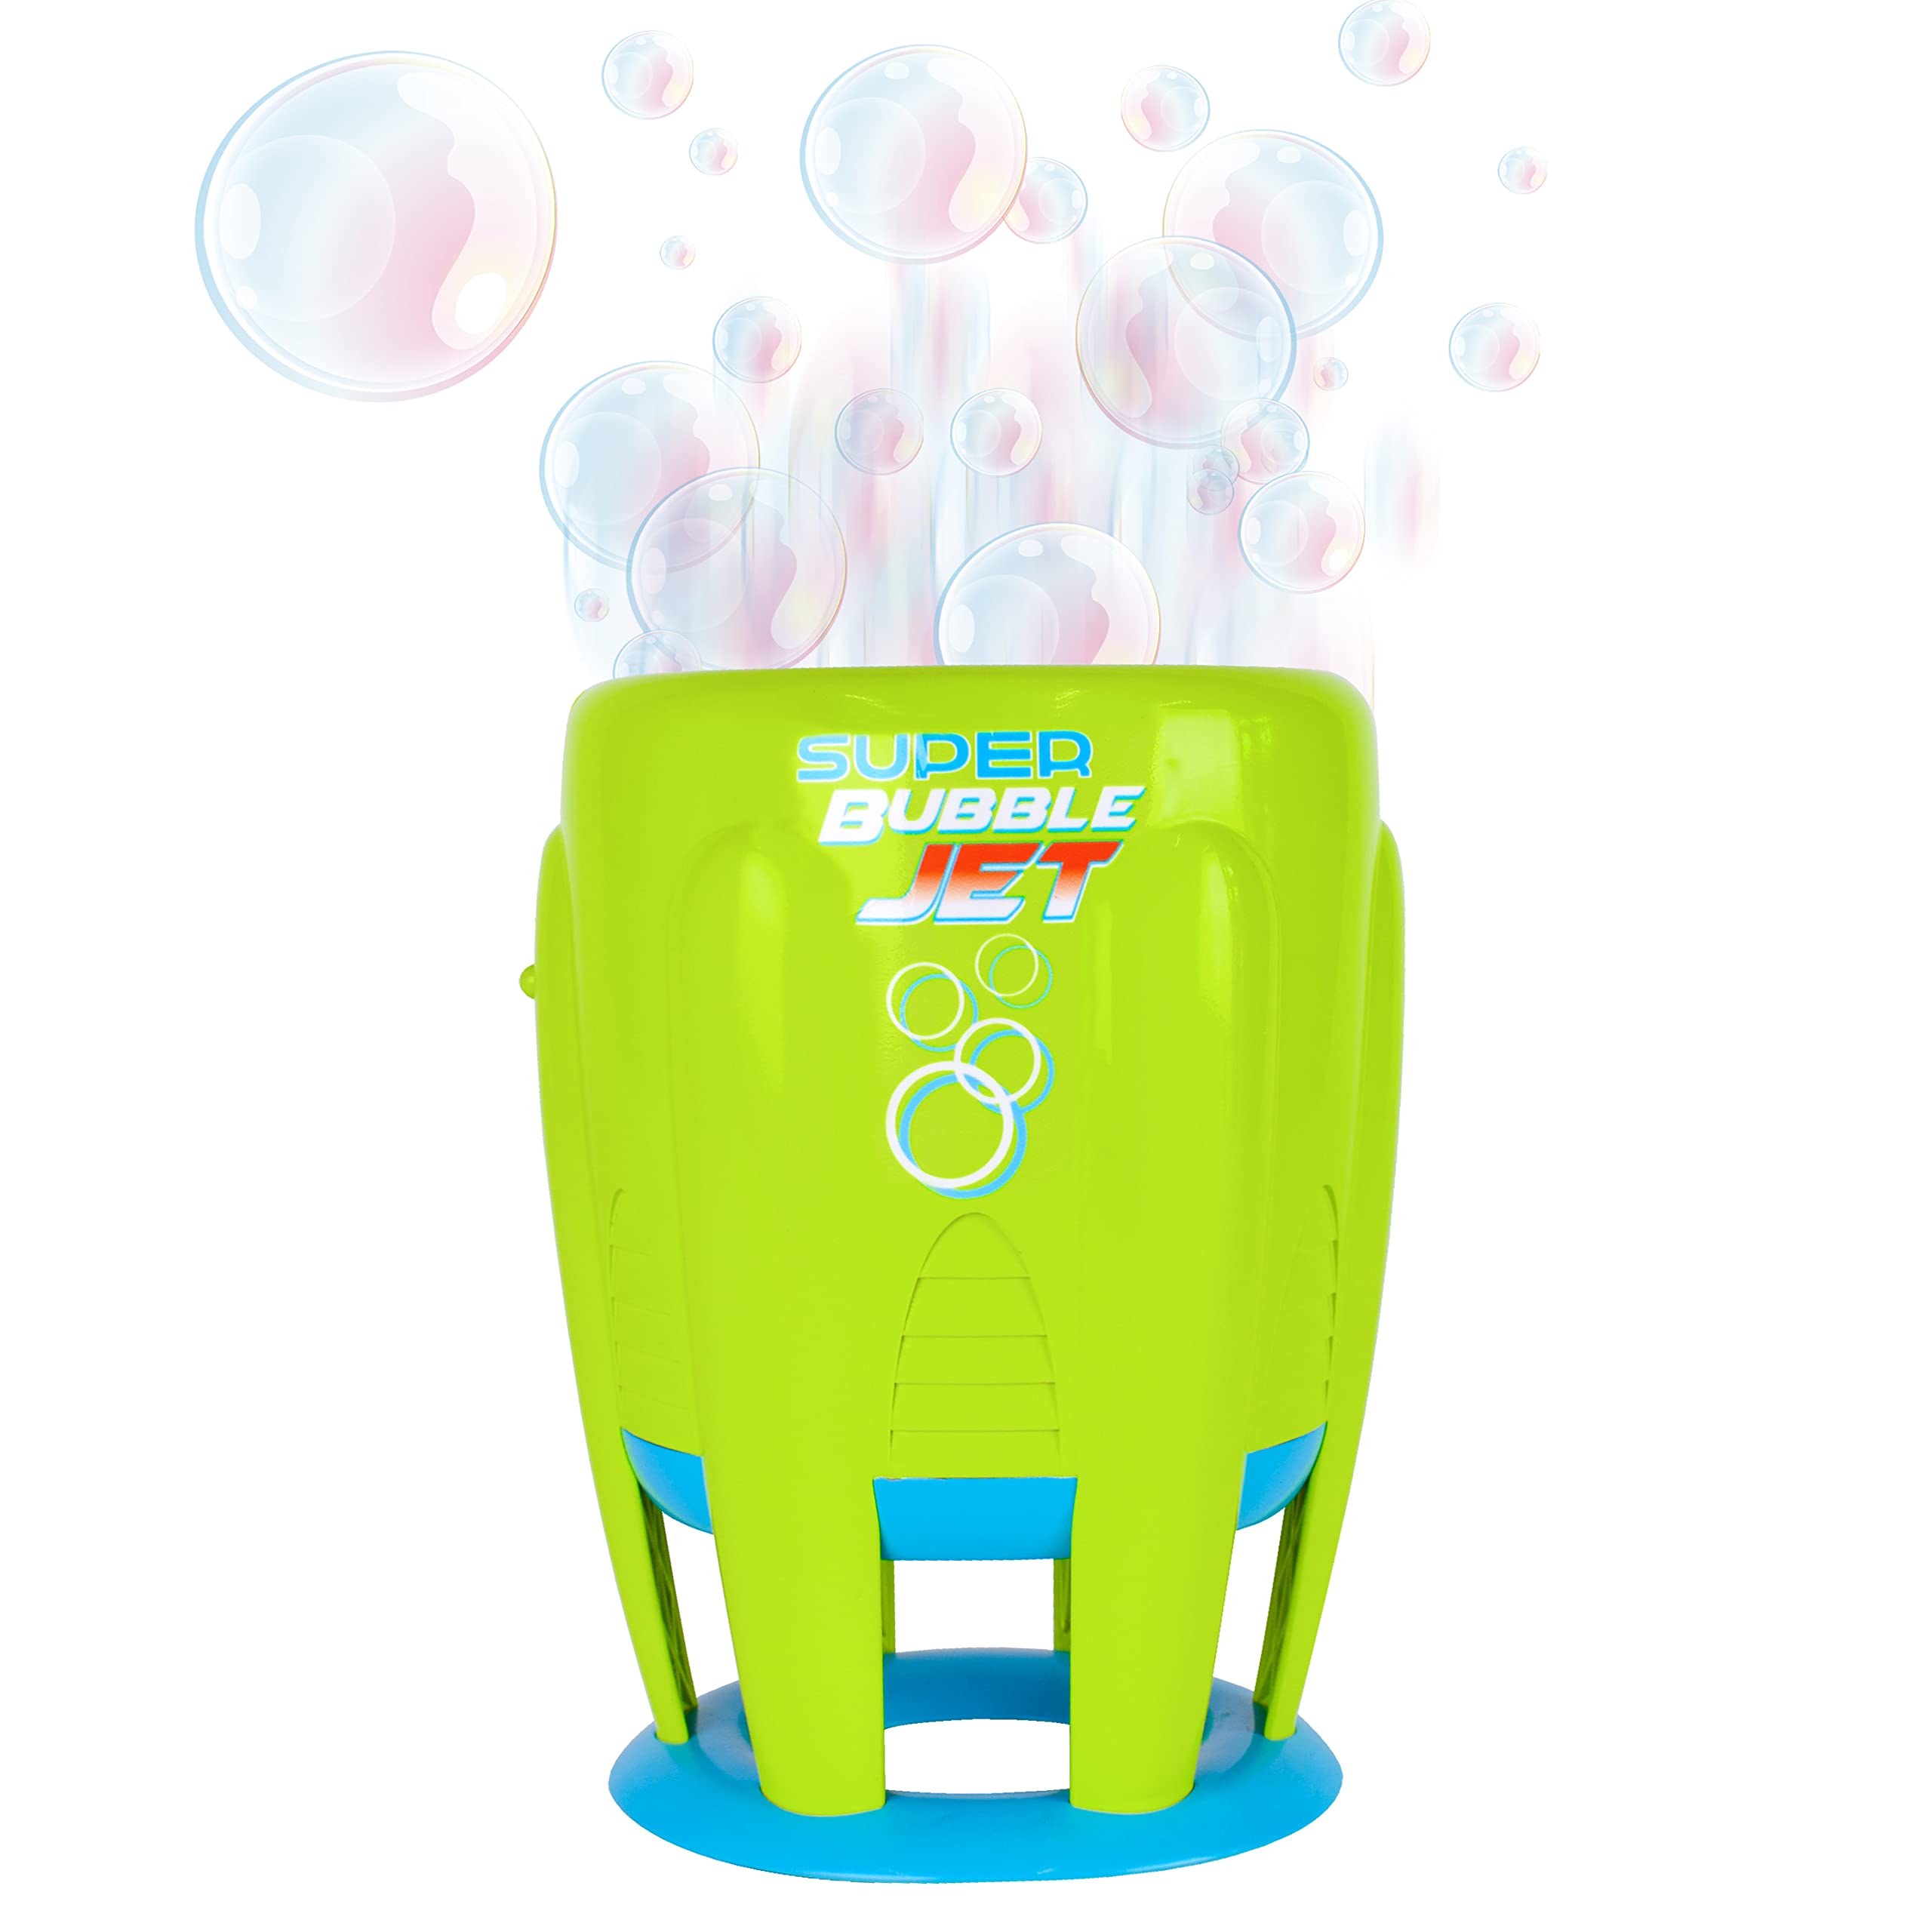 Maxx Bubbles Super Bubble Jet Automatic Bubble Blowing Machine w/ 4oz Bubble Solution $5 + Free Shipping w/ Prime or on $25+